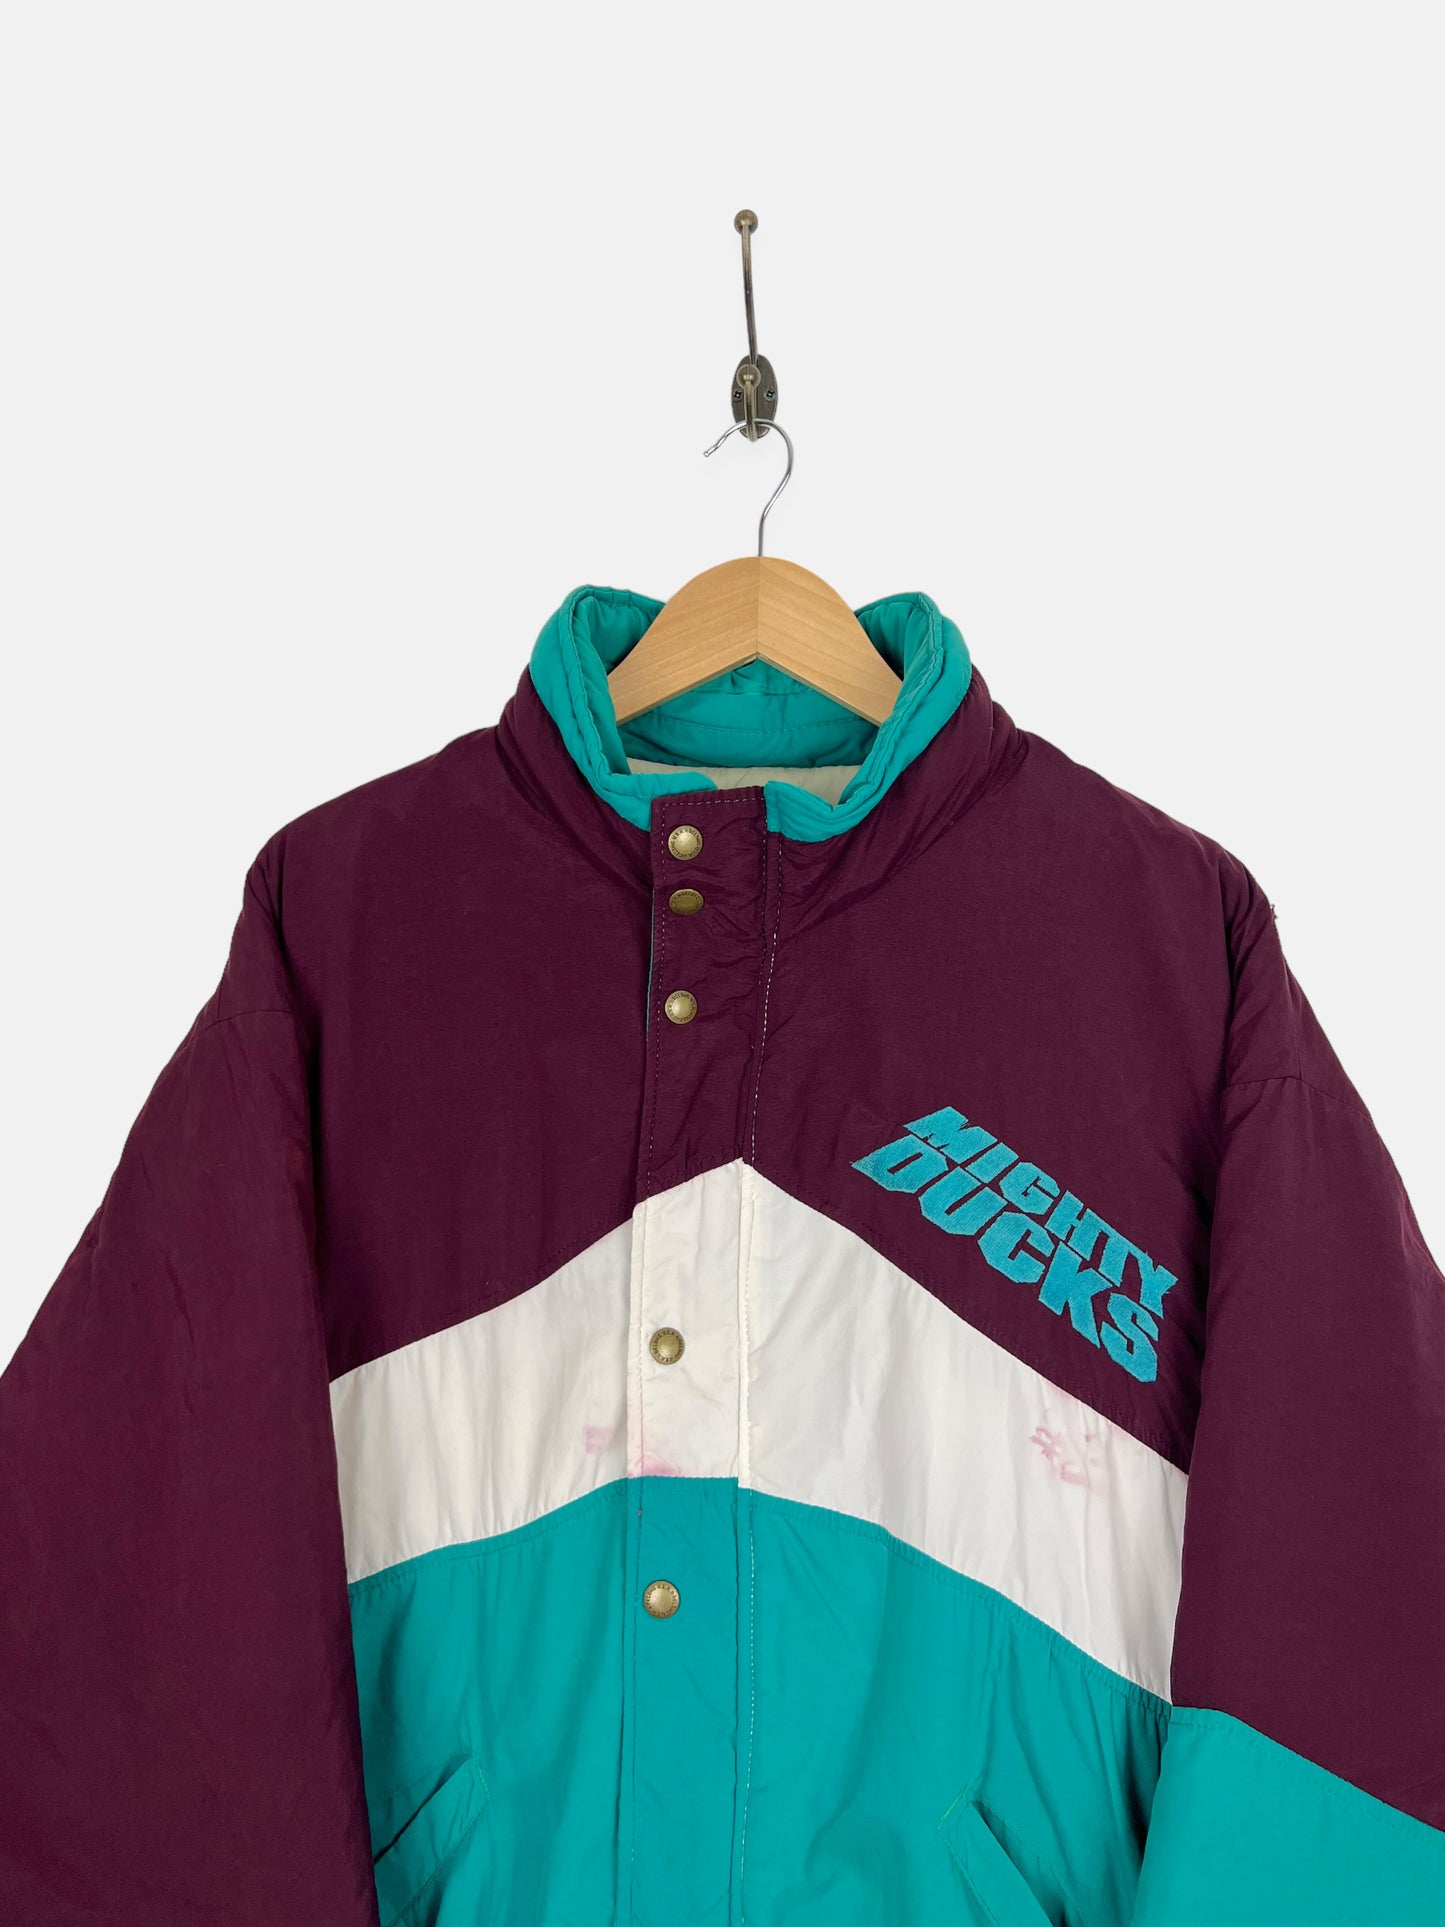 90's Anaheim Mighty Ducks NHL Embroidered Vintage Puffer Jacket Size XL